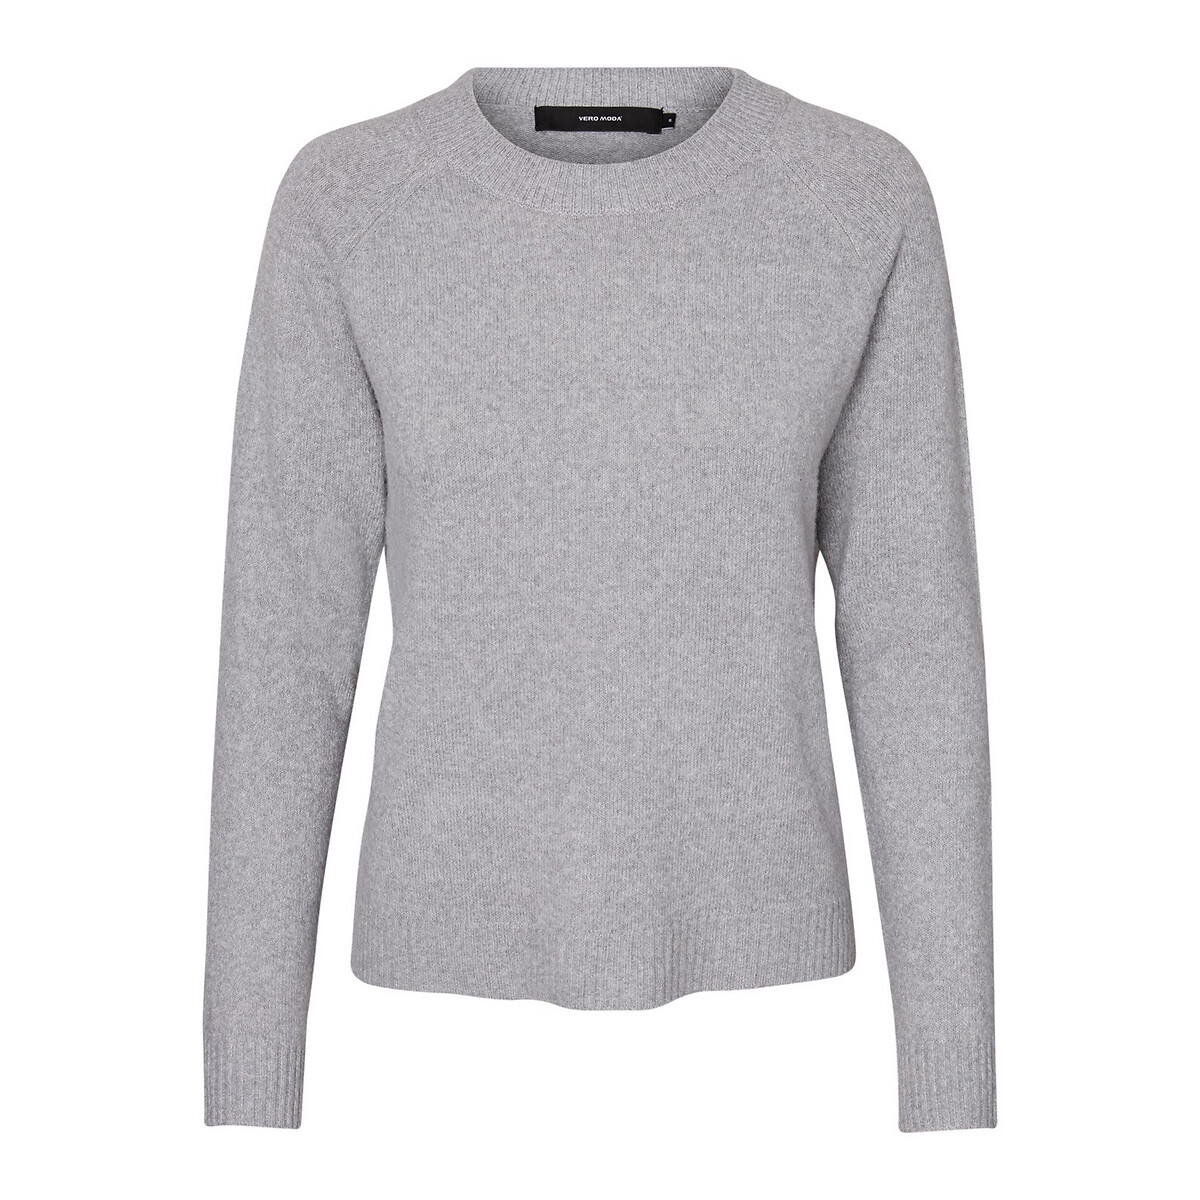 Пуловер La Redoute С круглым вырезом тонкий трикотаж XS серый, размер XS - фото 4